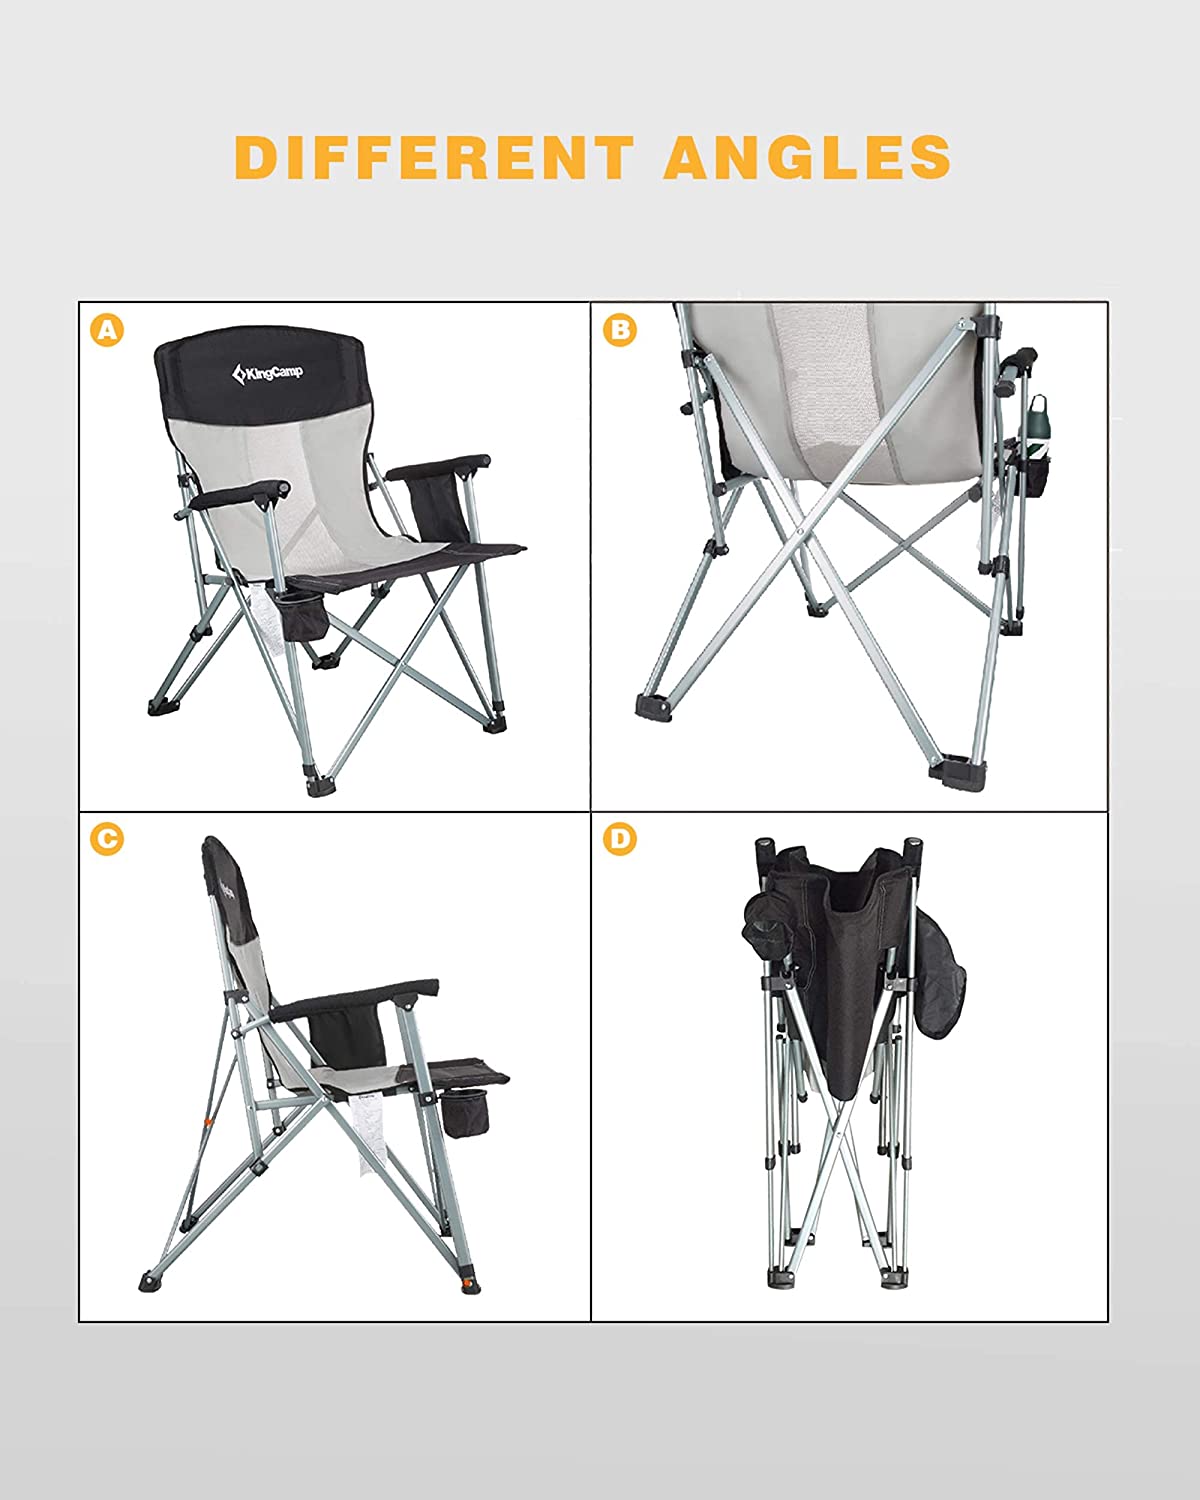 KingCamp Folding Lightweight Camping Chair